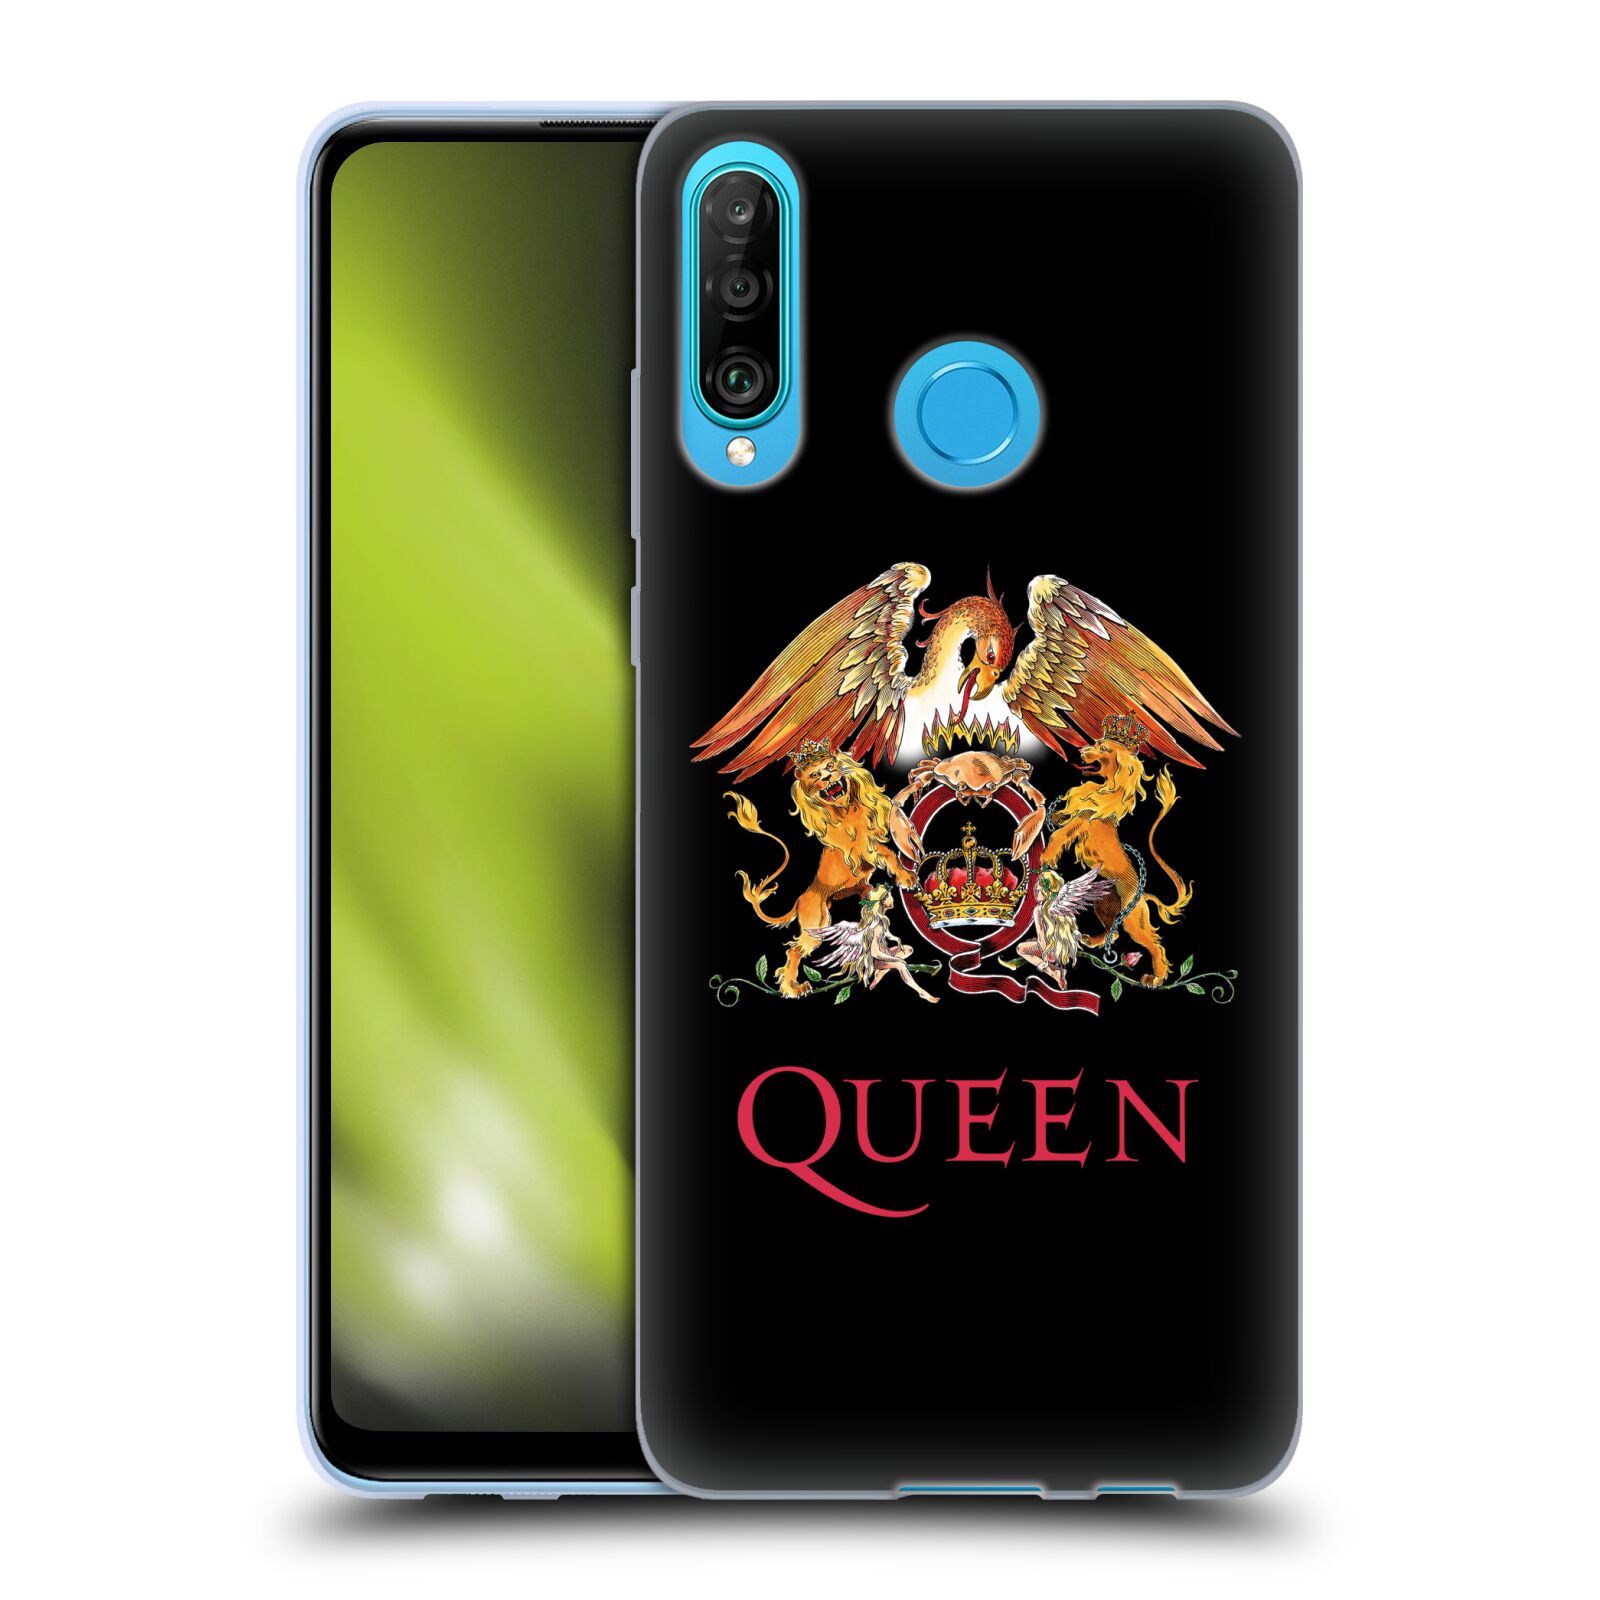 Silikonové pouzdro na mobil Huawei P30 Lite - Head Case - Queen - Logo (Silikonový kryt, obal, pouzdro na mobilní telefon Huawei P30 Lite Dual Sim (MAR-L01A, MAR-L21A, MAR-LX1A) s motivem Queen - Logo)